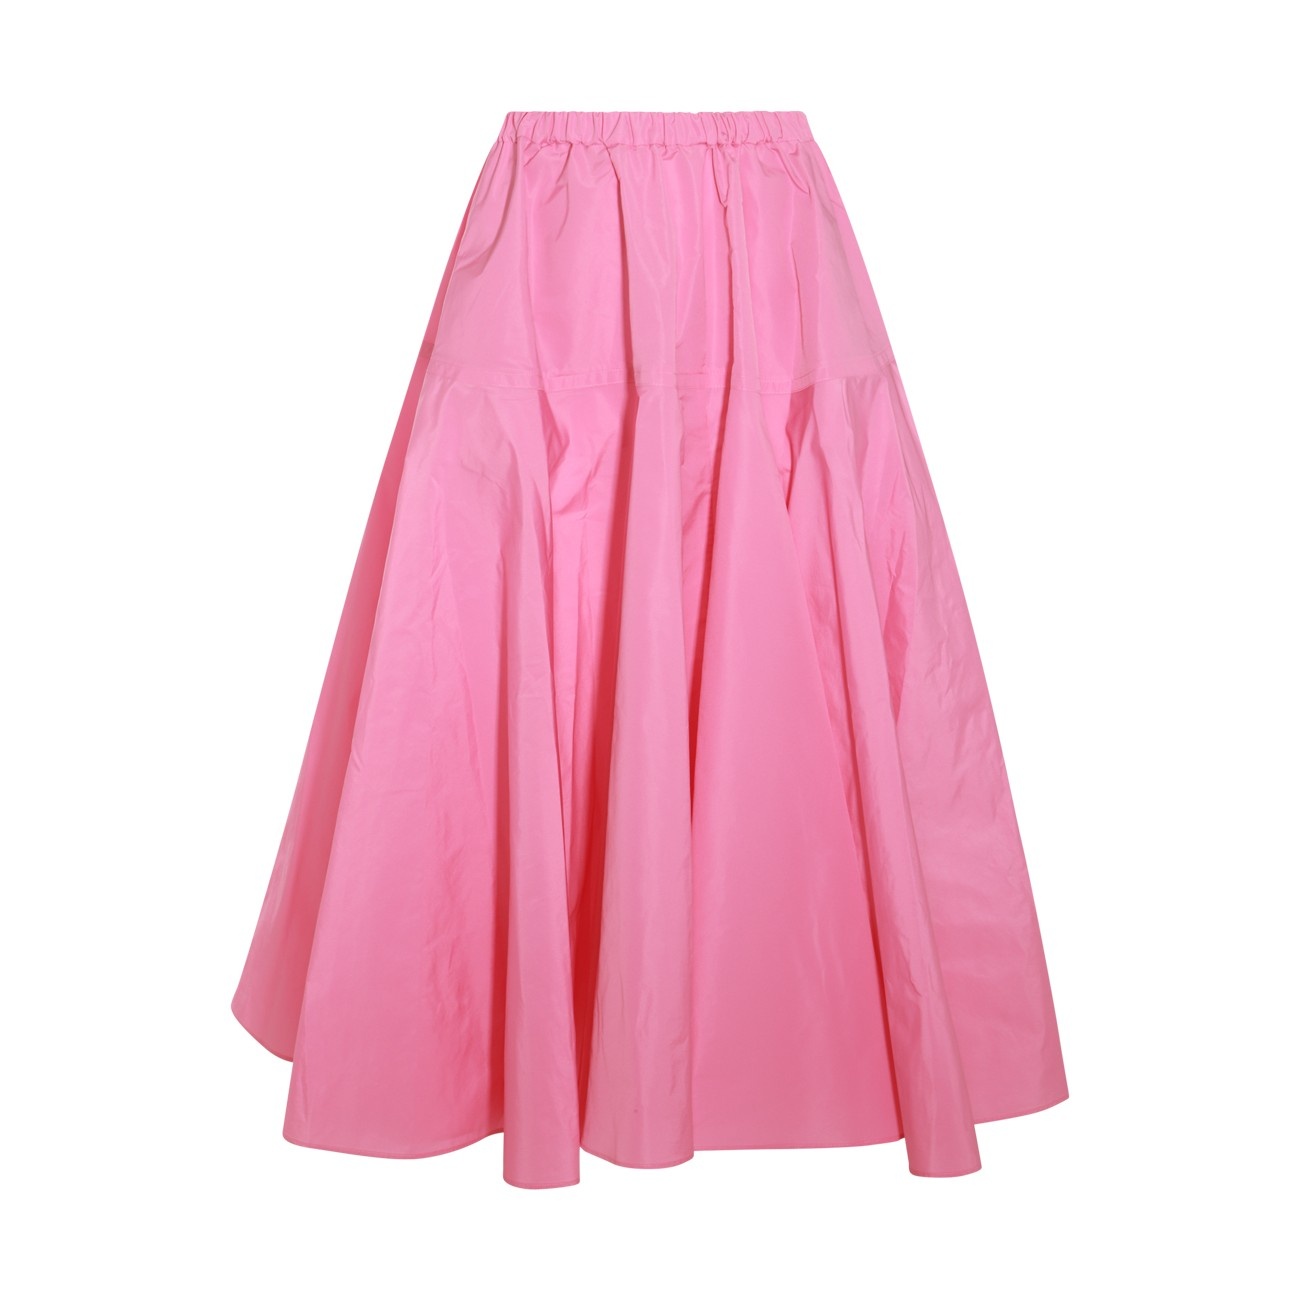 pink skirt - 1